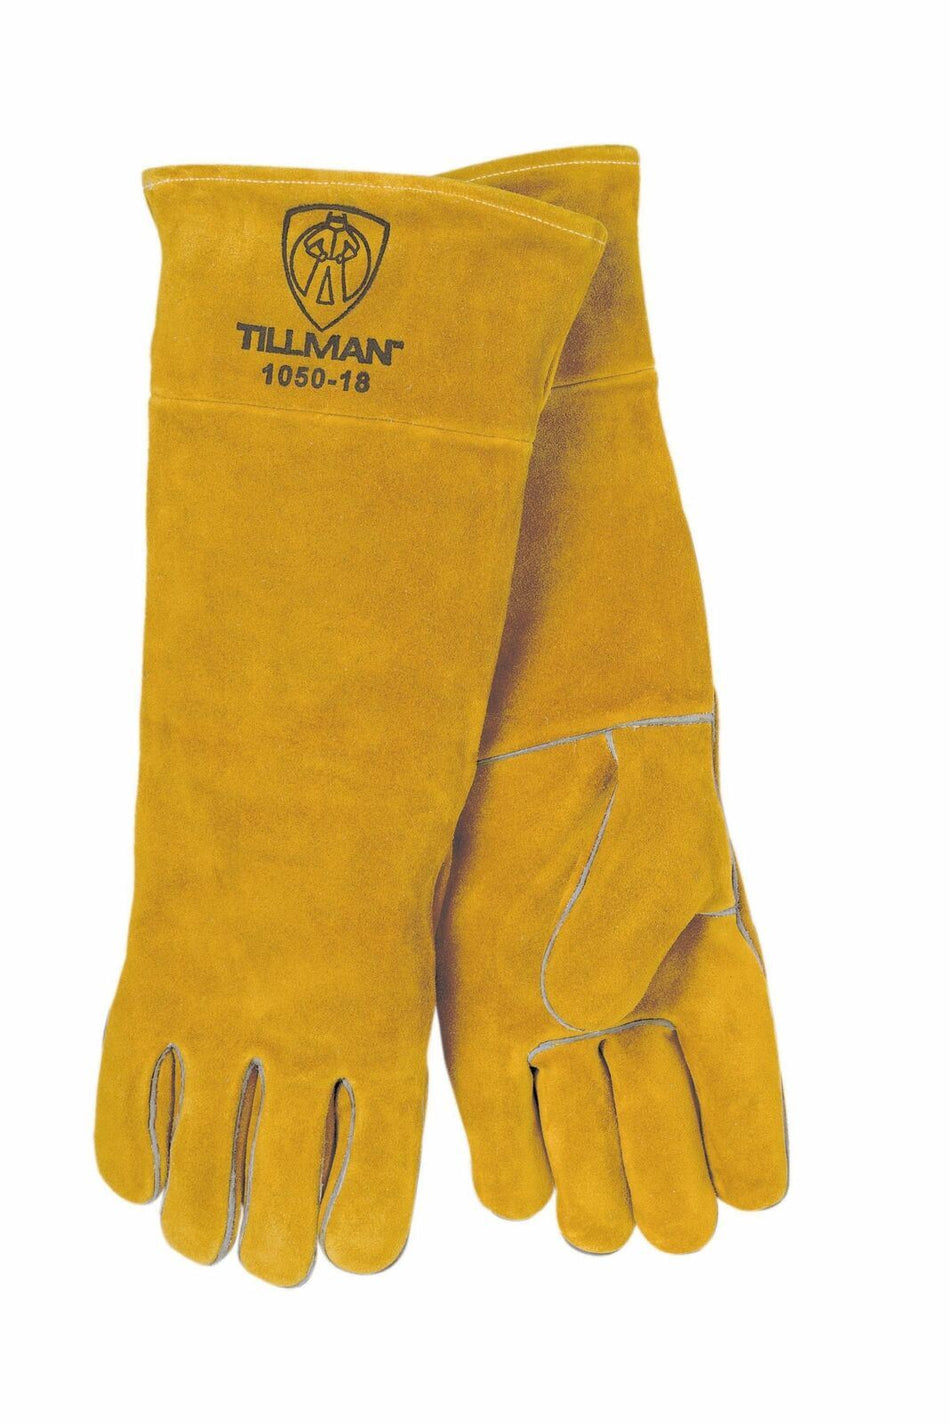 Tillman 18" Premium Side Split Cowhide Welding Gloves 1050-18